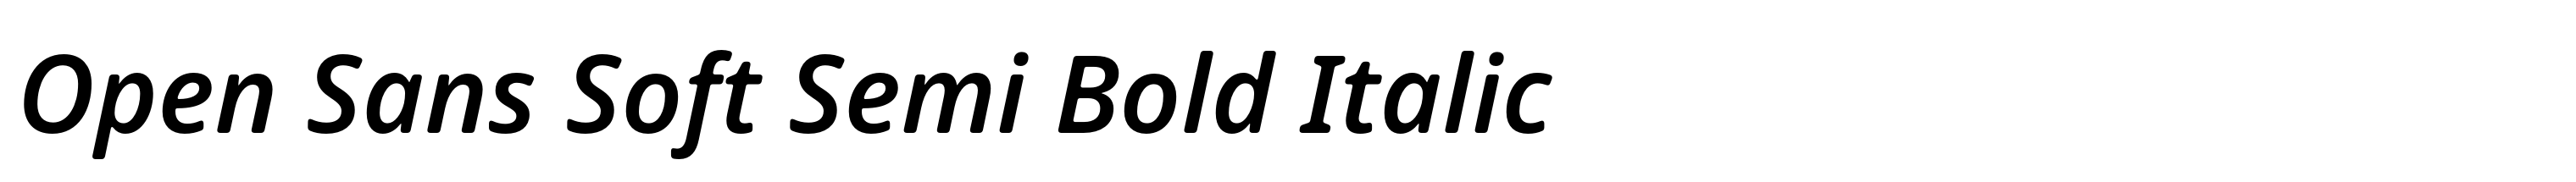 Open Sans Soft Semi Bold Italic